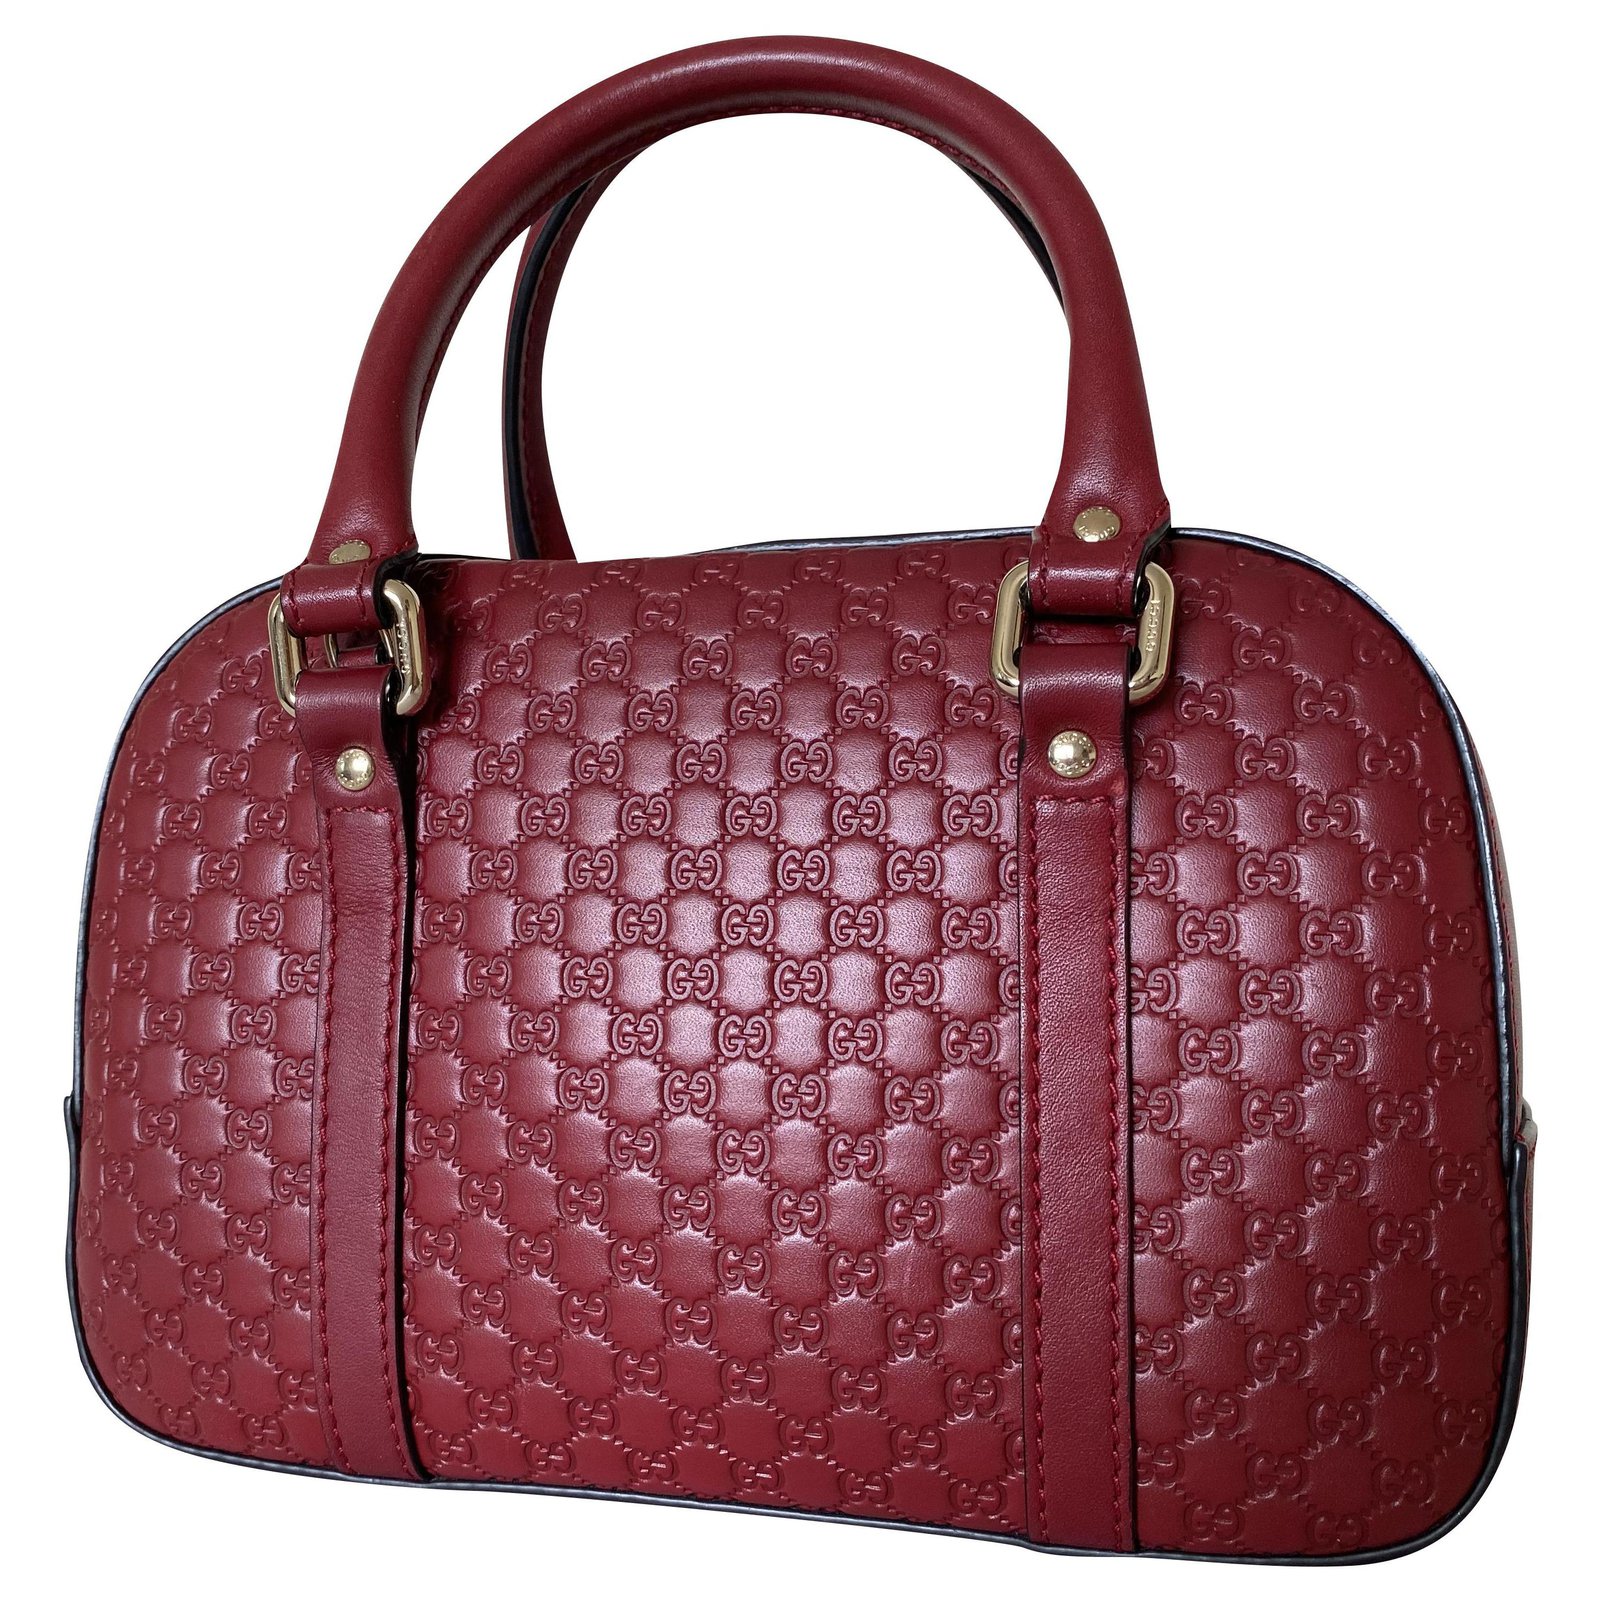 Gucci Guccissima Bowling Bag Handbags 